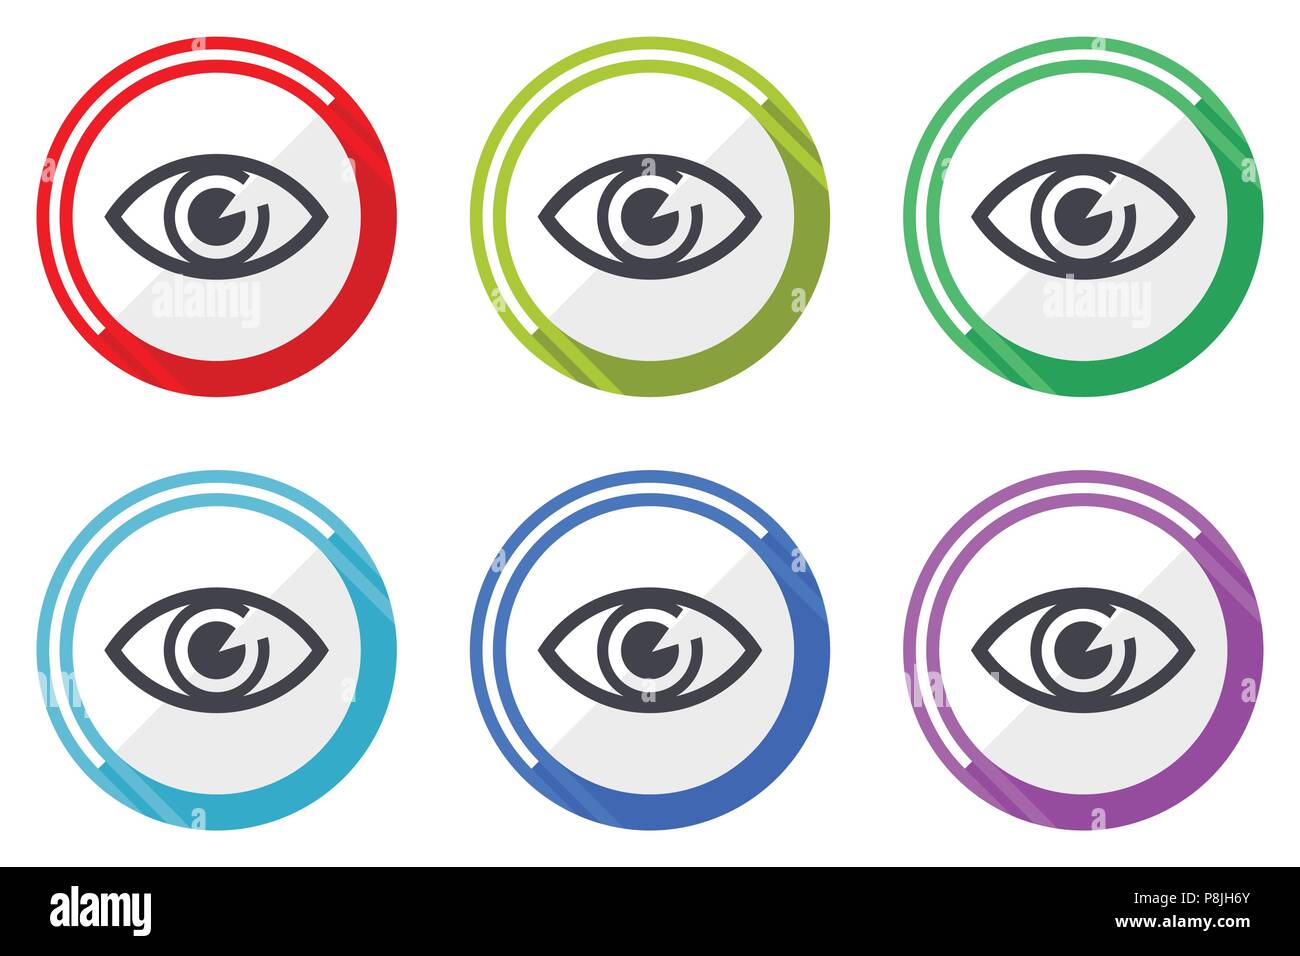 Eye vector icons, set of colorful flat design internet symbols on white ...